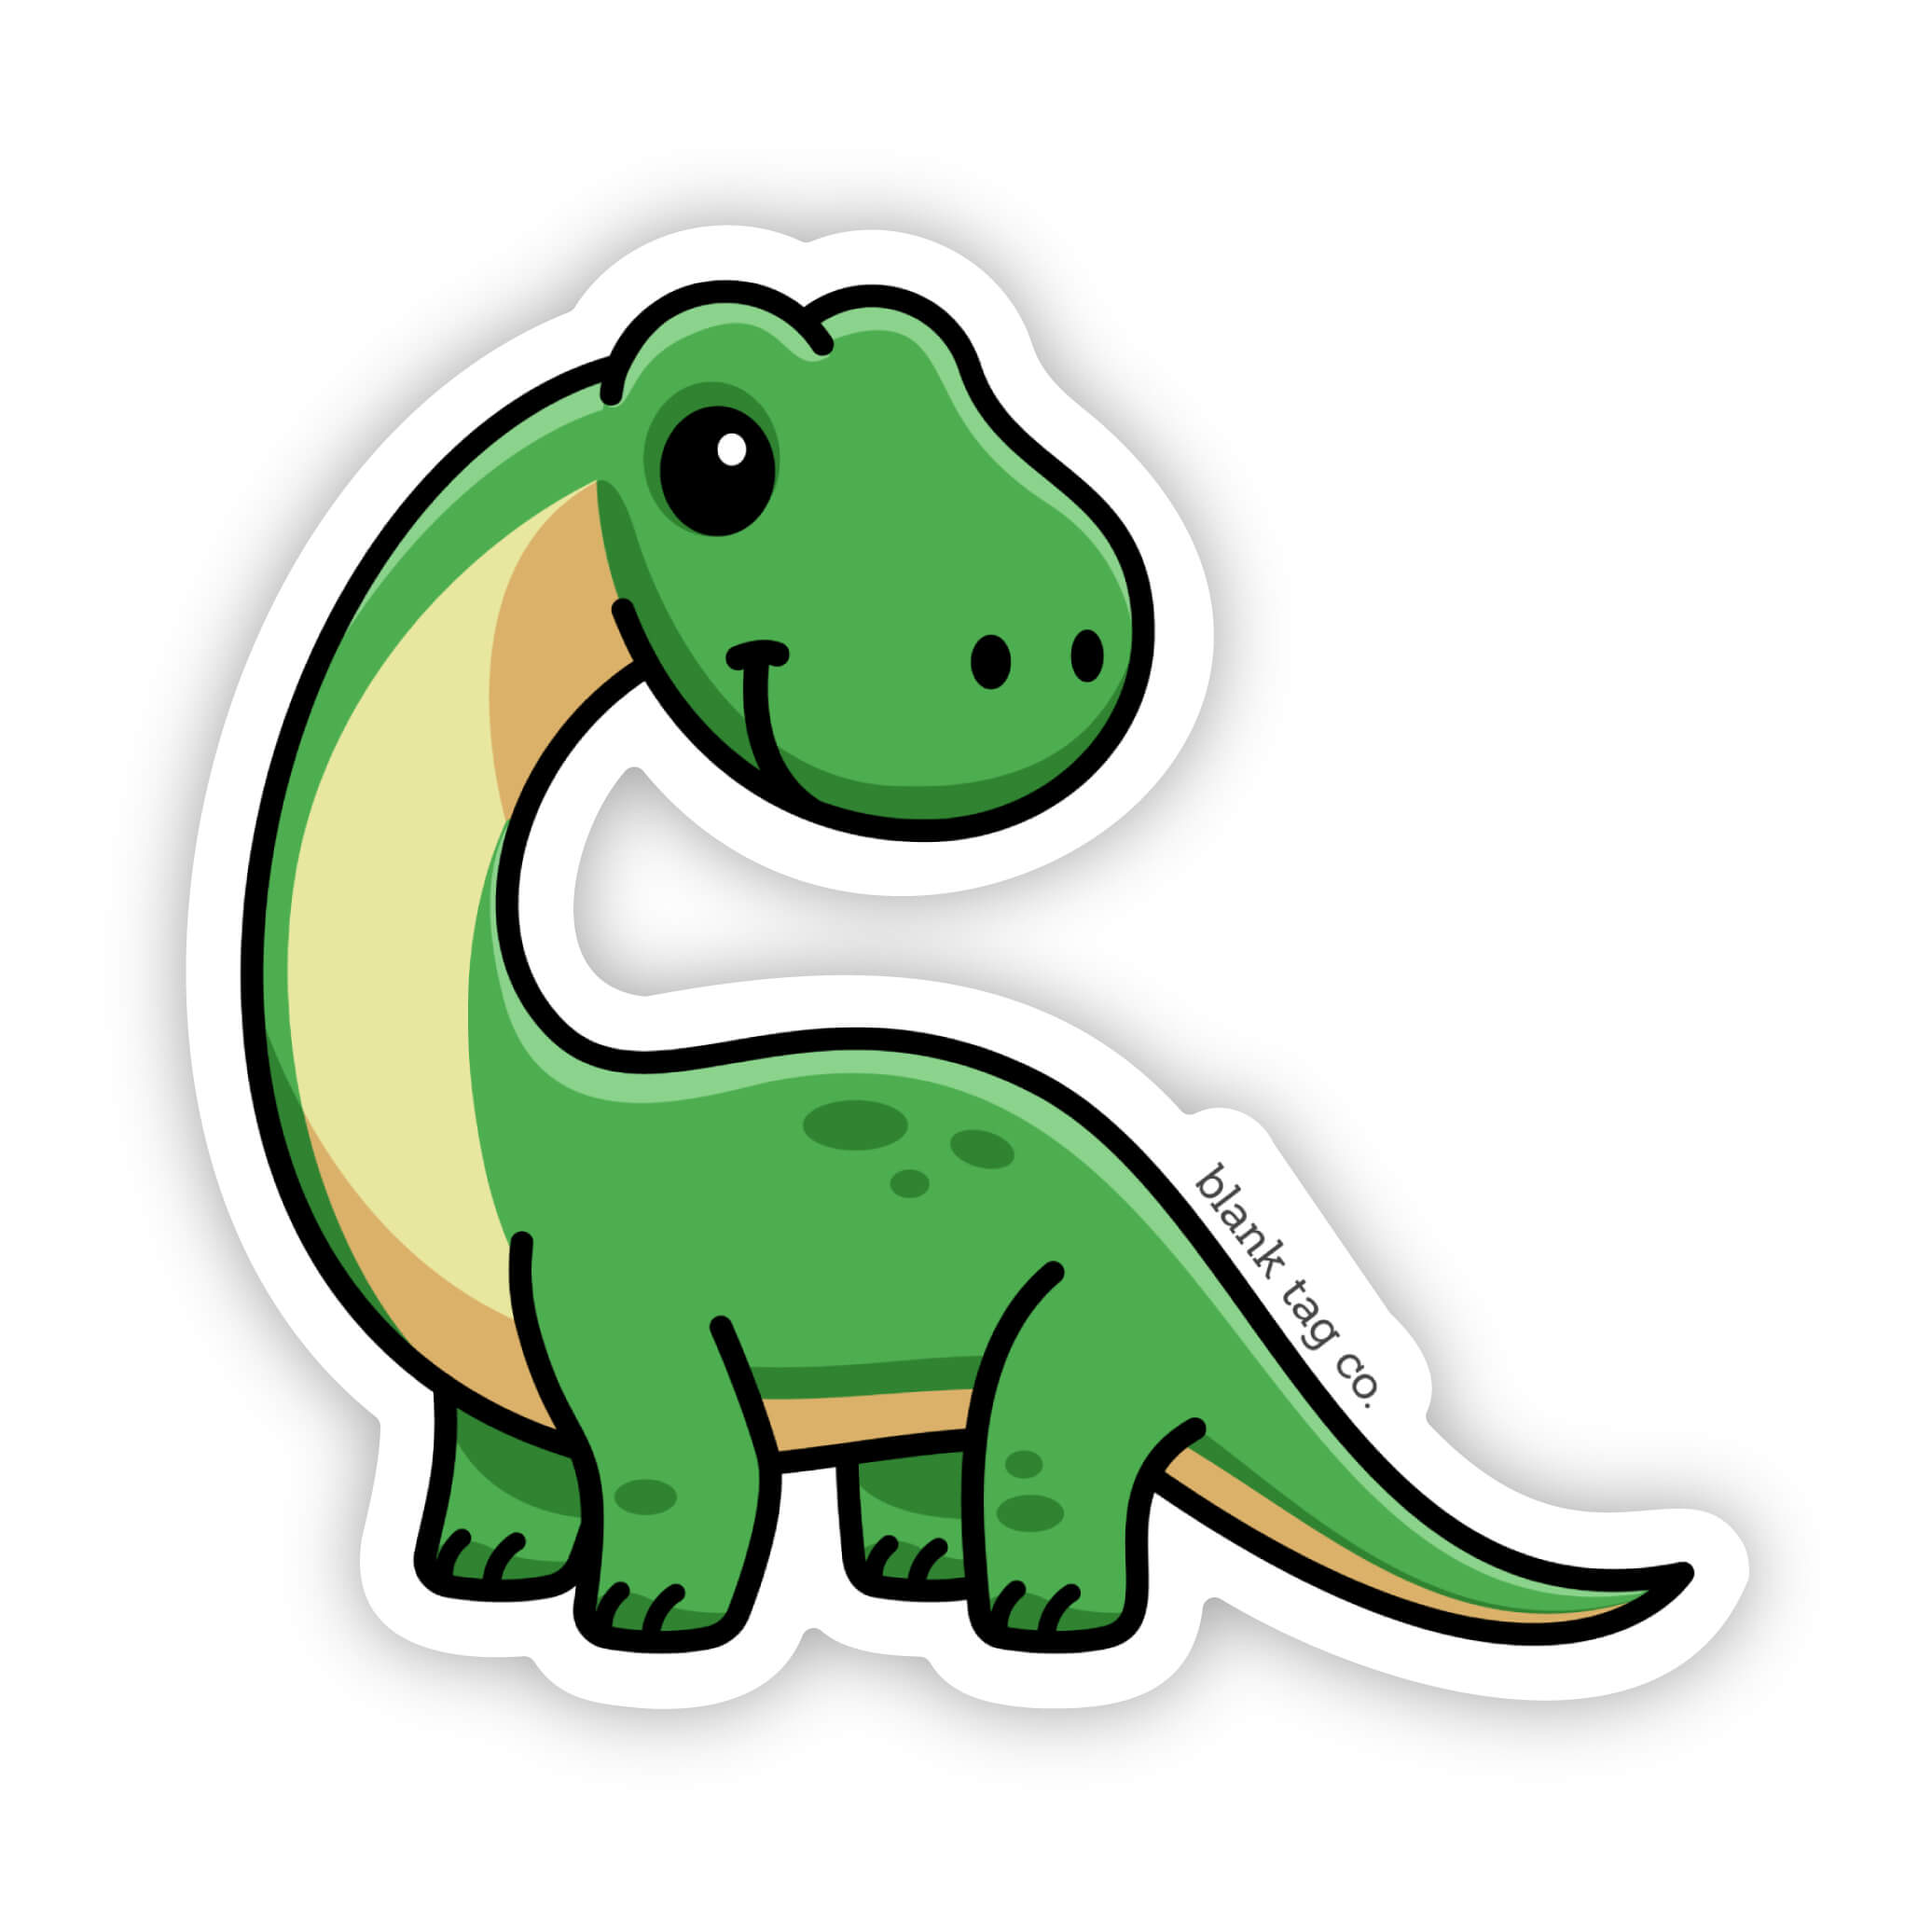 The Brontosaurus Sticker